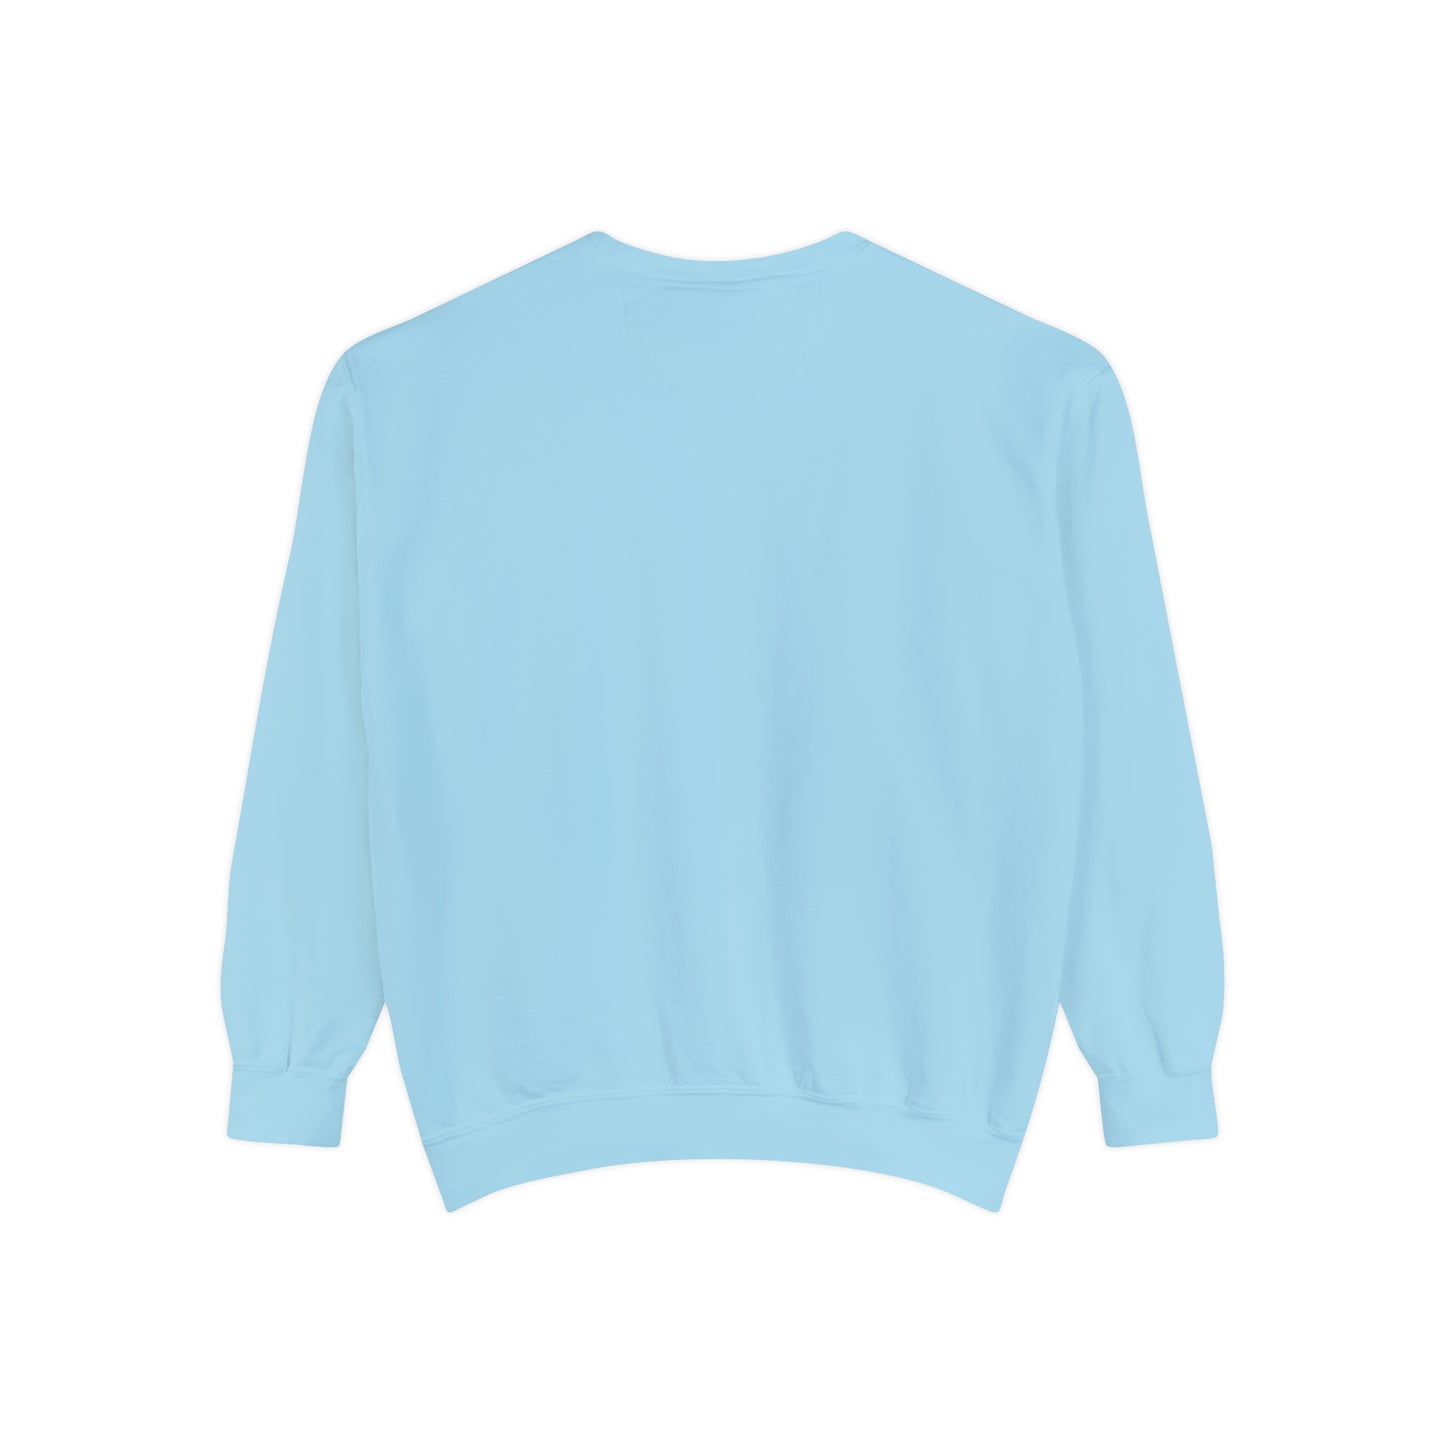 Conversation Hearts Unisex Garment-Dyed Sweatshirt Designed By Nichole Jacklyne